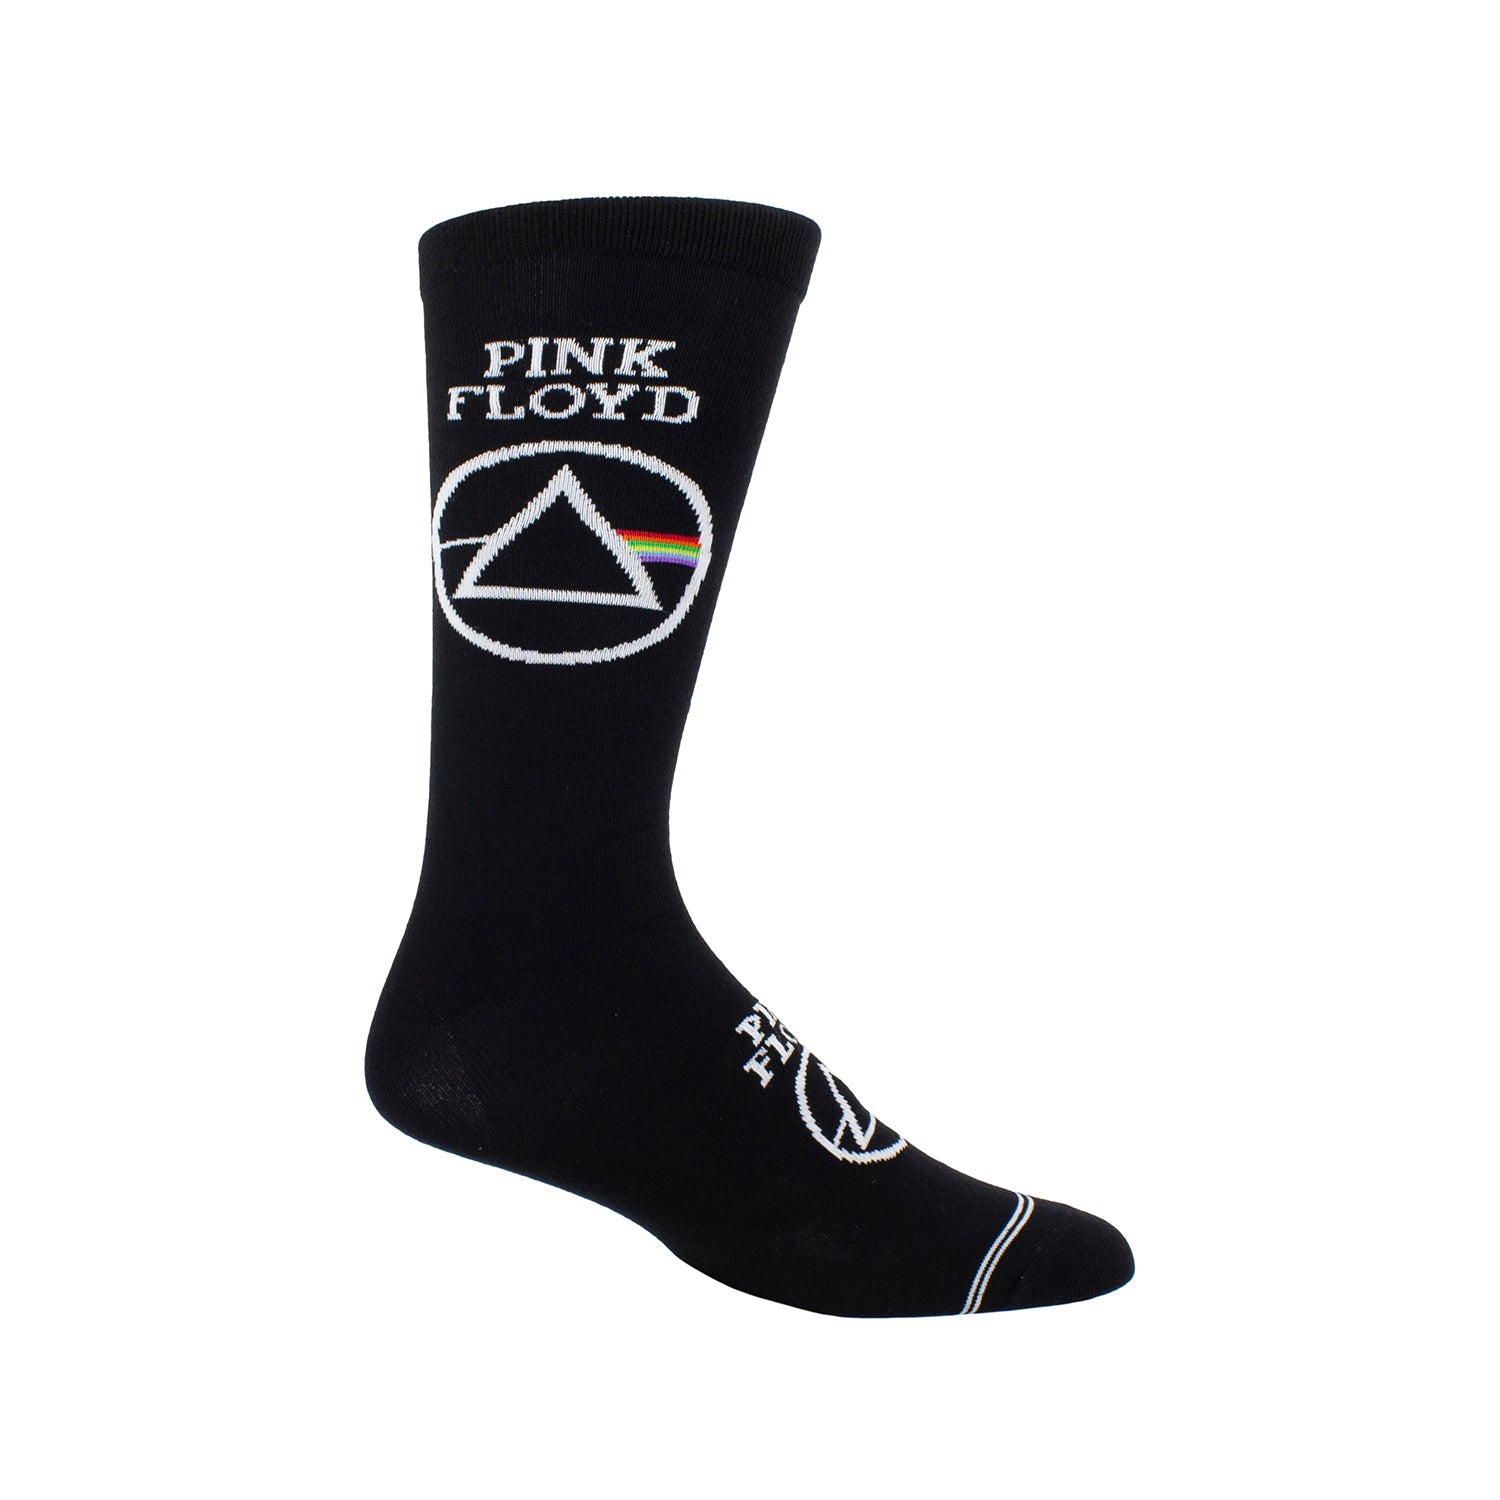 Pink Floyd Gift Boxed Crew Socks